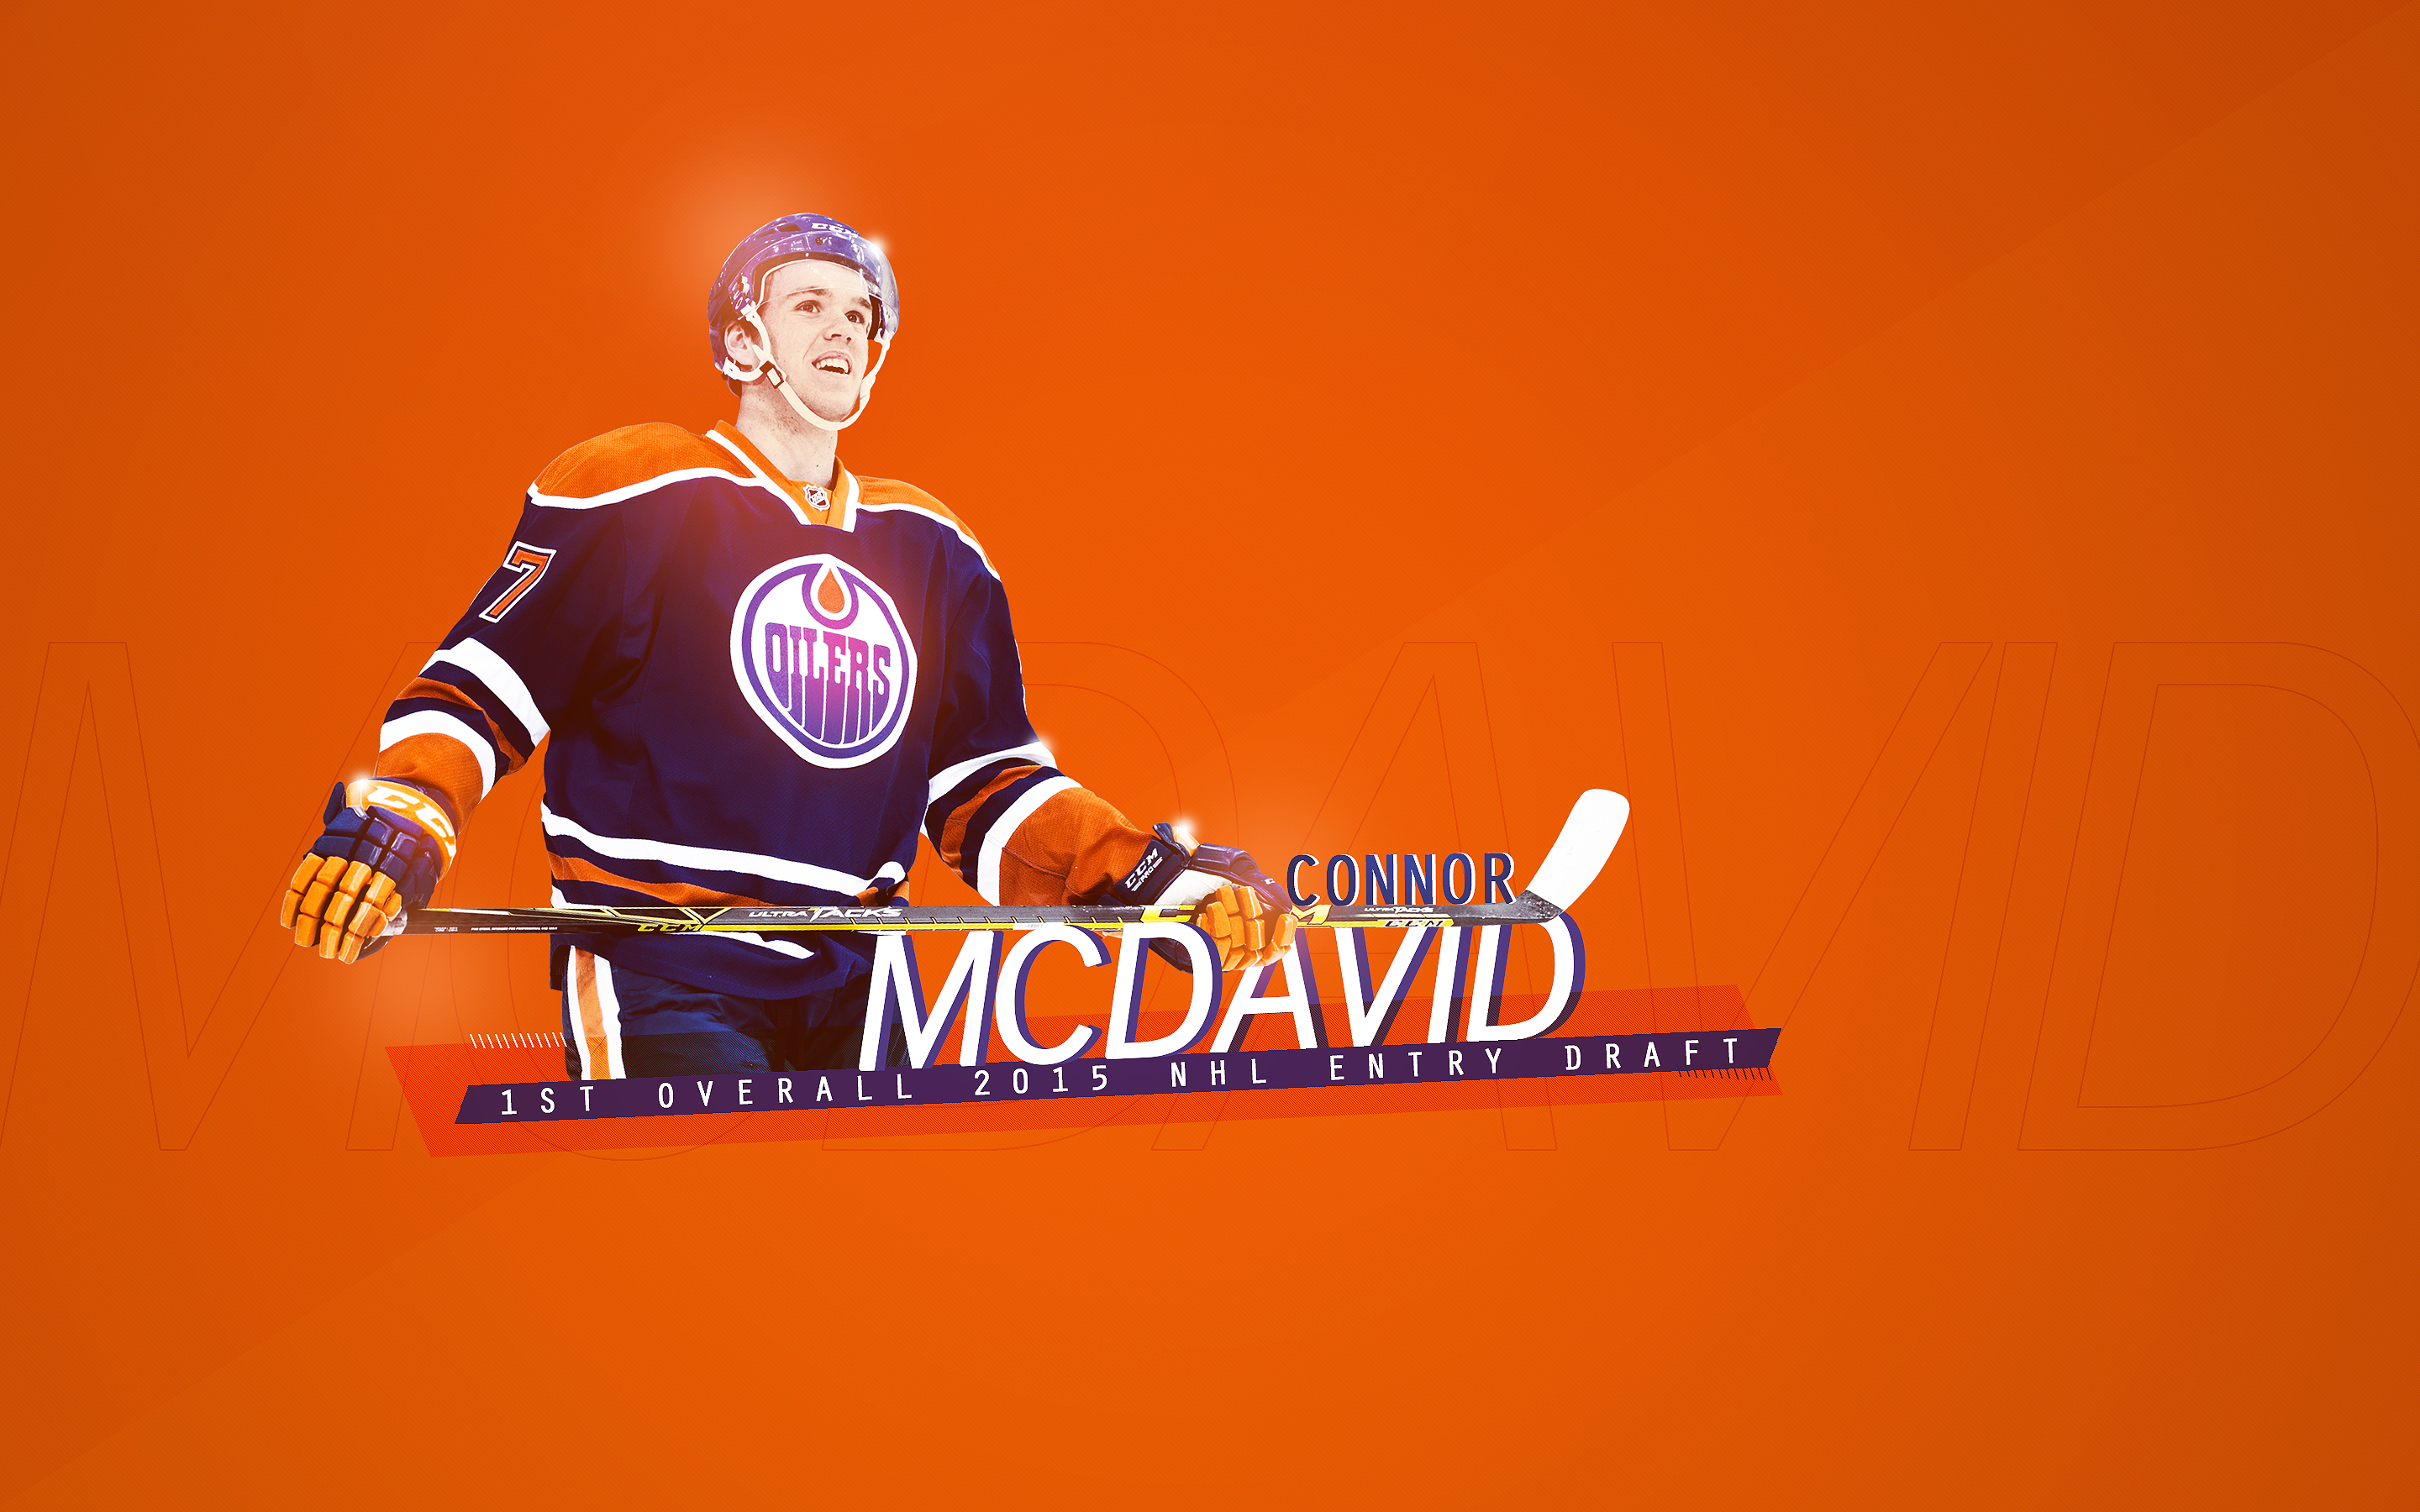 Connor Mcdavid Edmonton Oilers Desktop Wallaper HD By